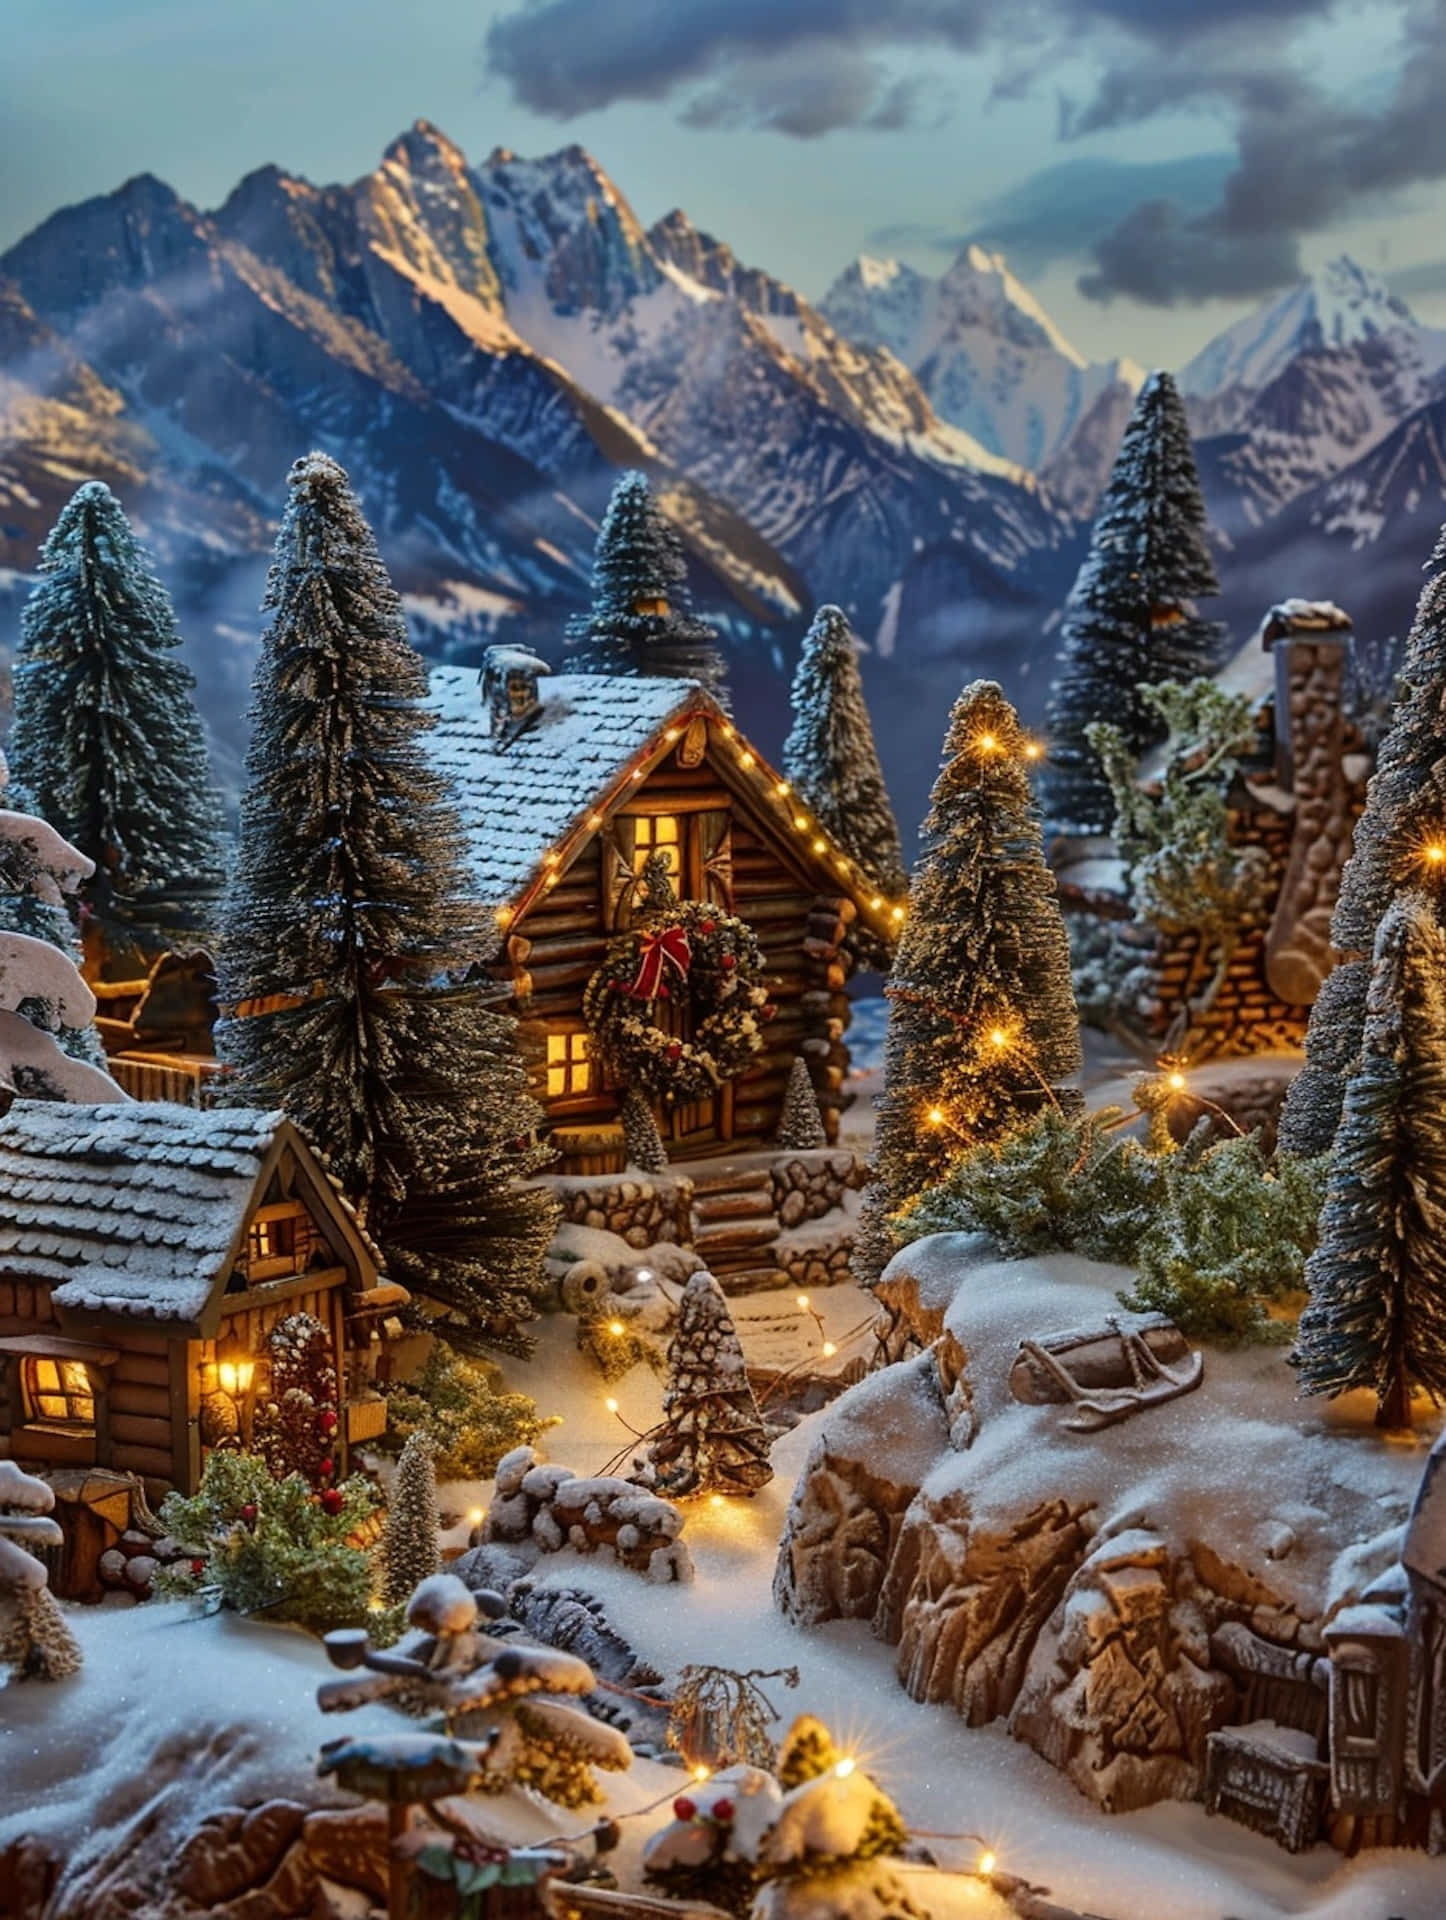 Enchanted Winter Village Christmas Scene Wallpaper